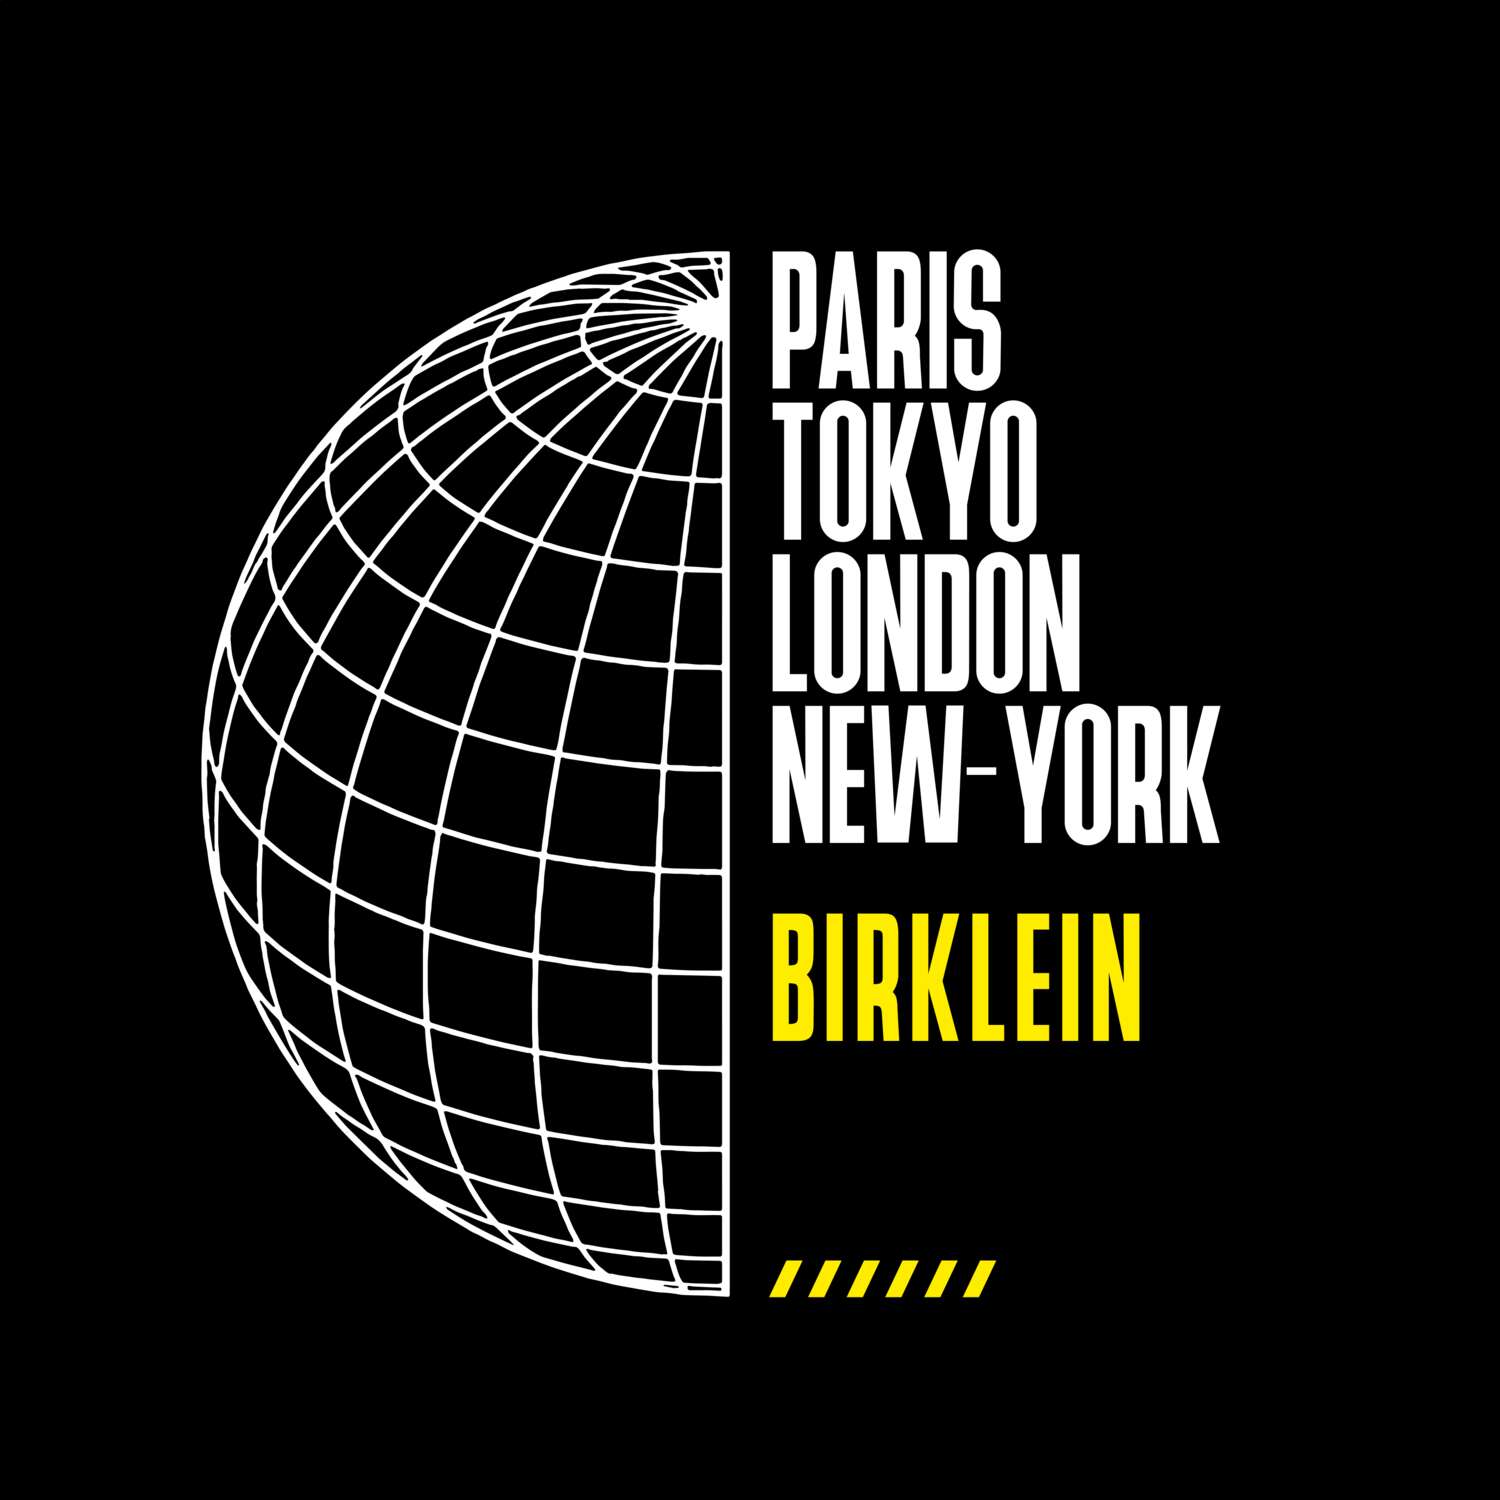 Birklein T-Shirt »Paris Tokyo London«